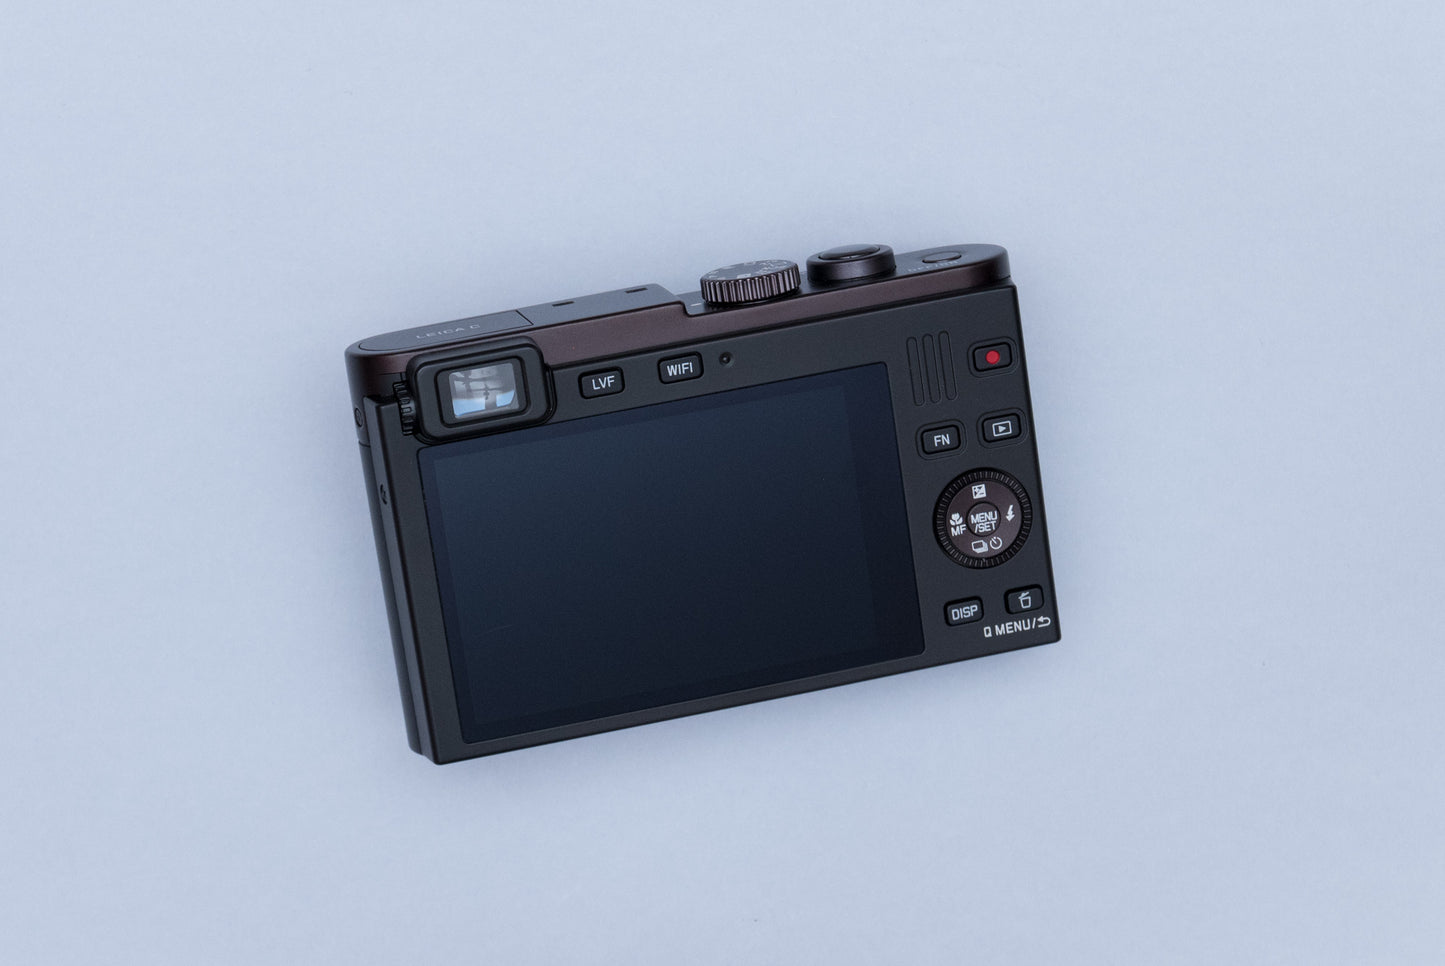 Leica C Typ 112 Compact Digital Camera